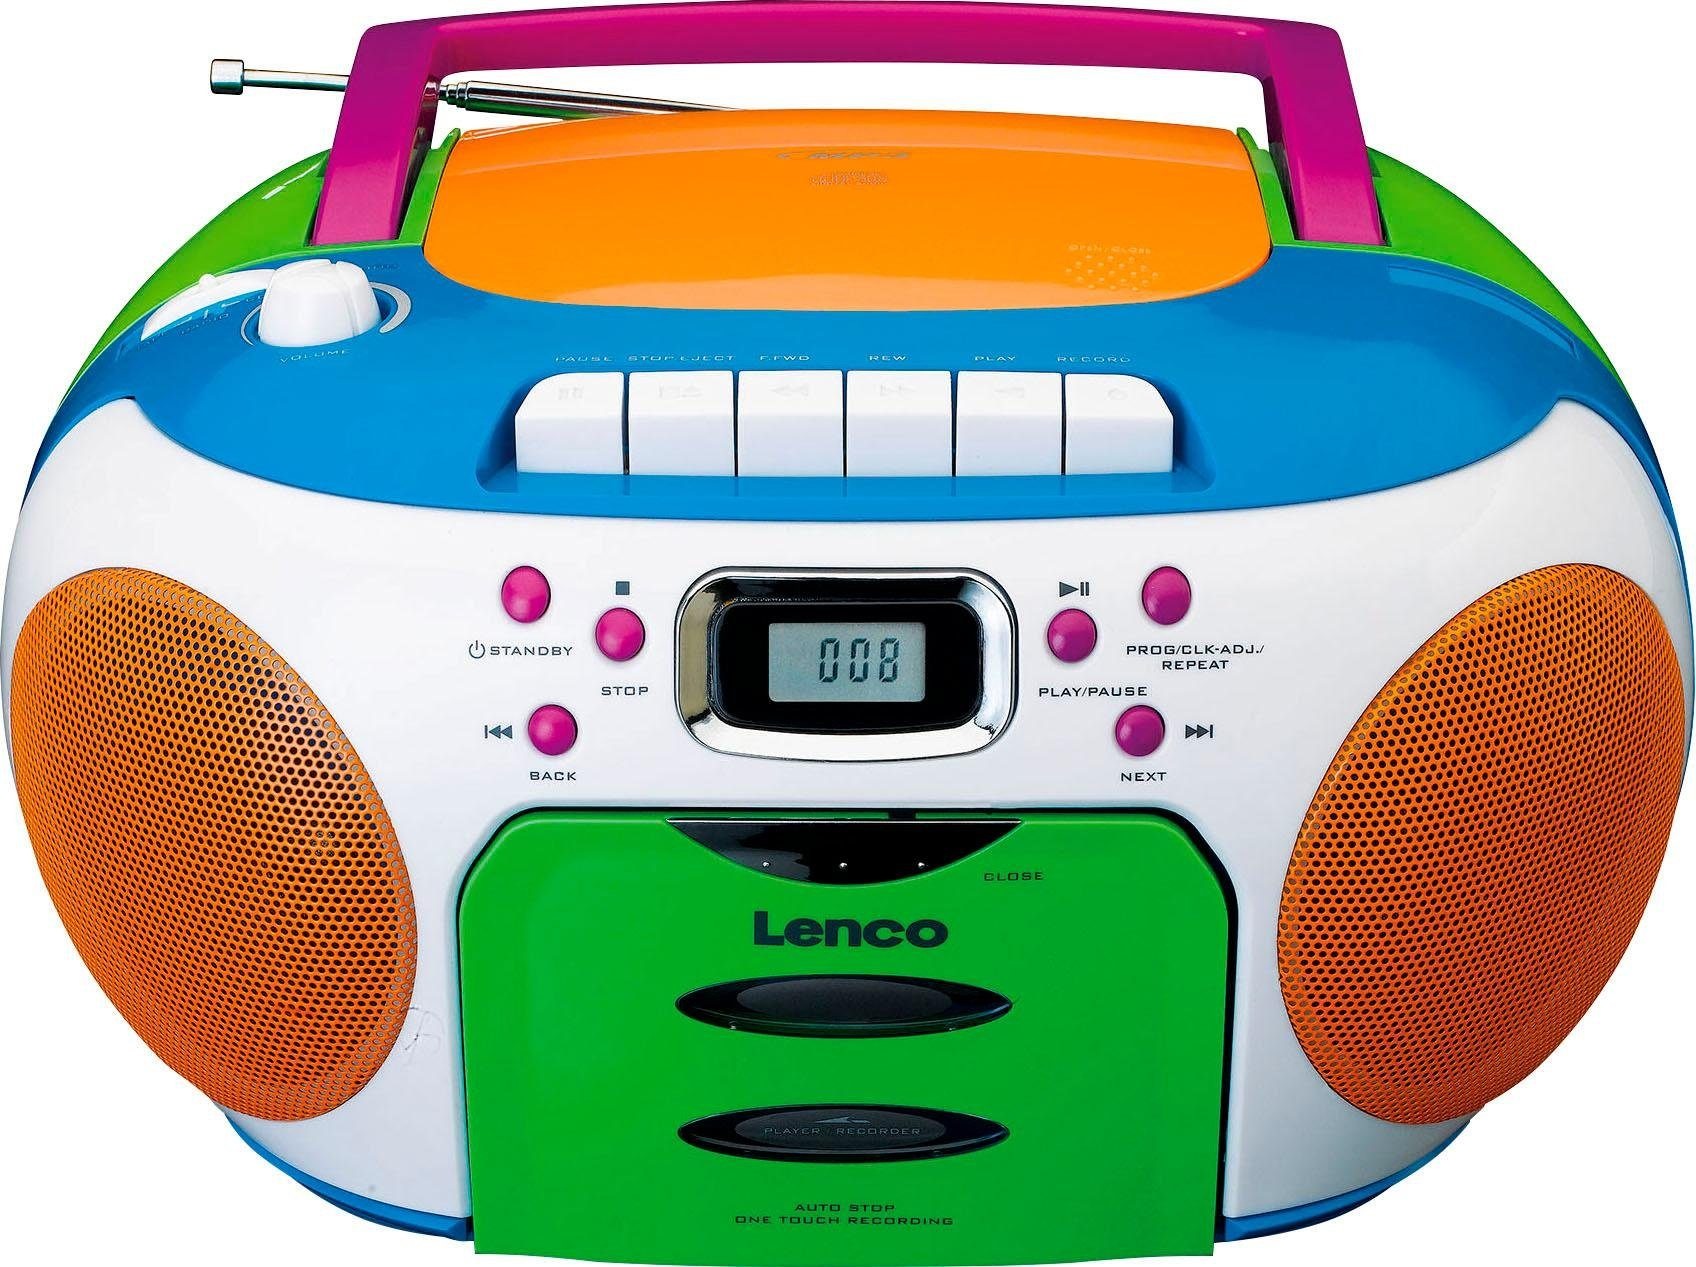 UKW-Radio jetzt Stereo-CD im Player Lenco »SCD-971«, %Sale